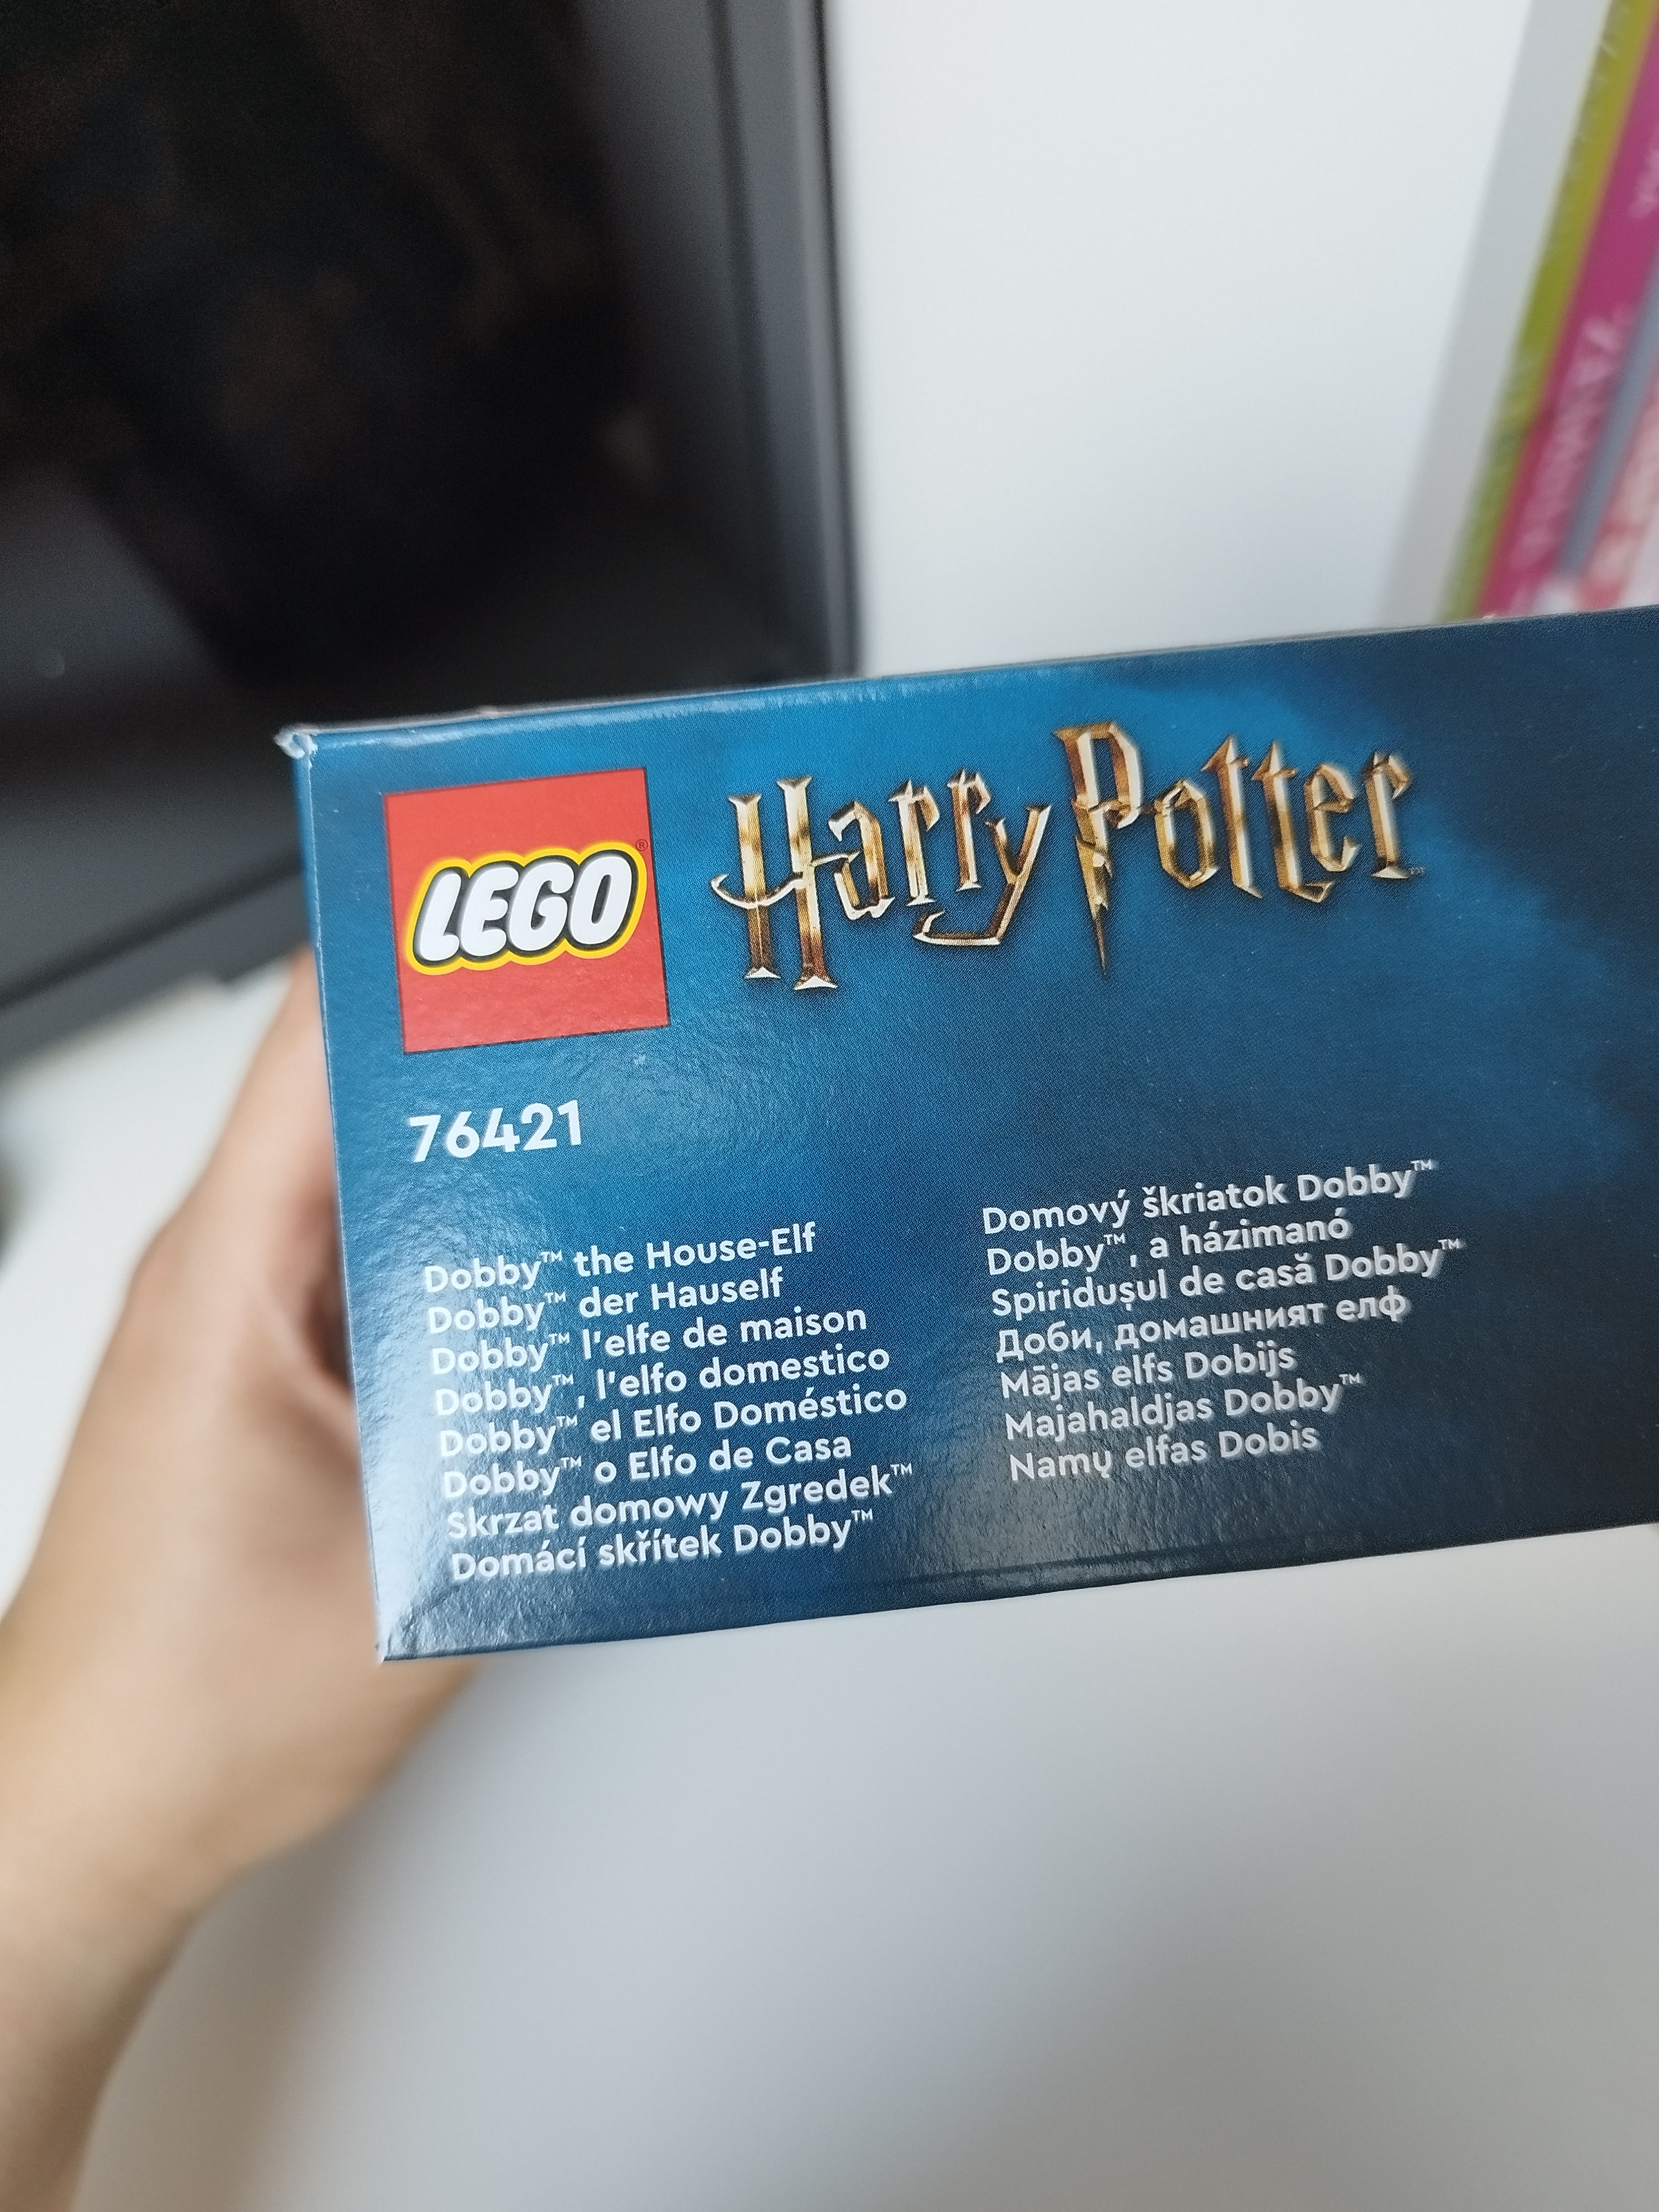 LEGO Harry Potter "Zgredek"  -  TaniaKsiazk